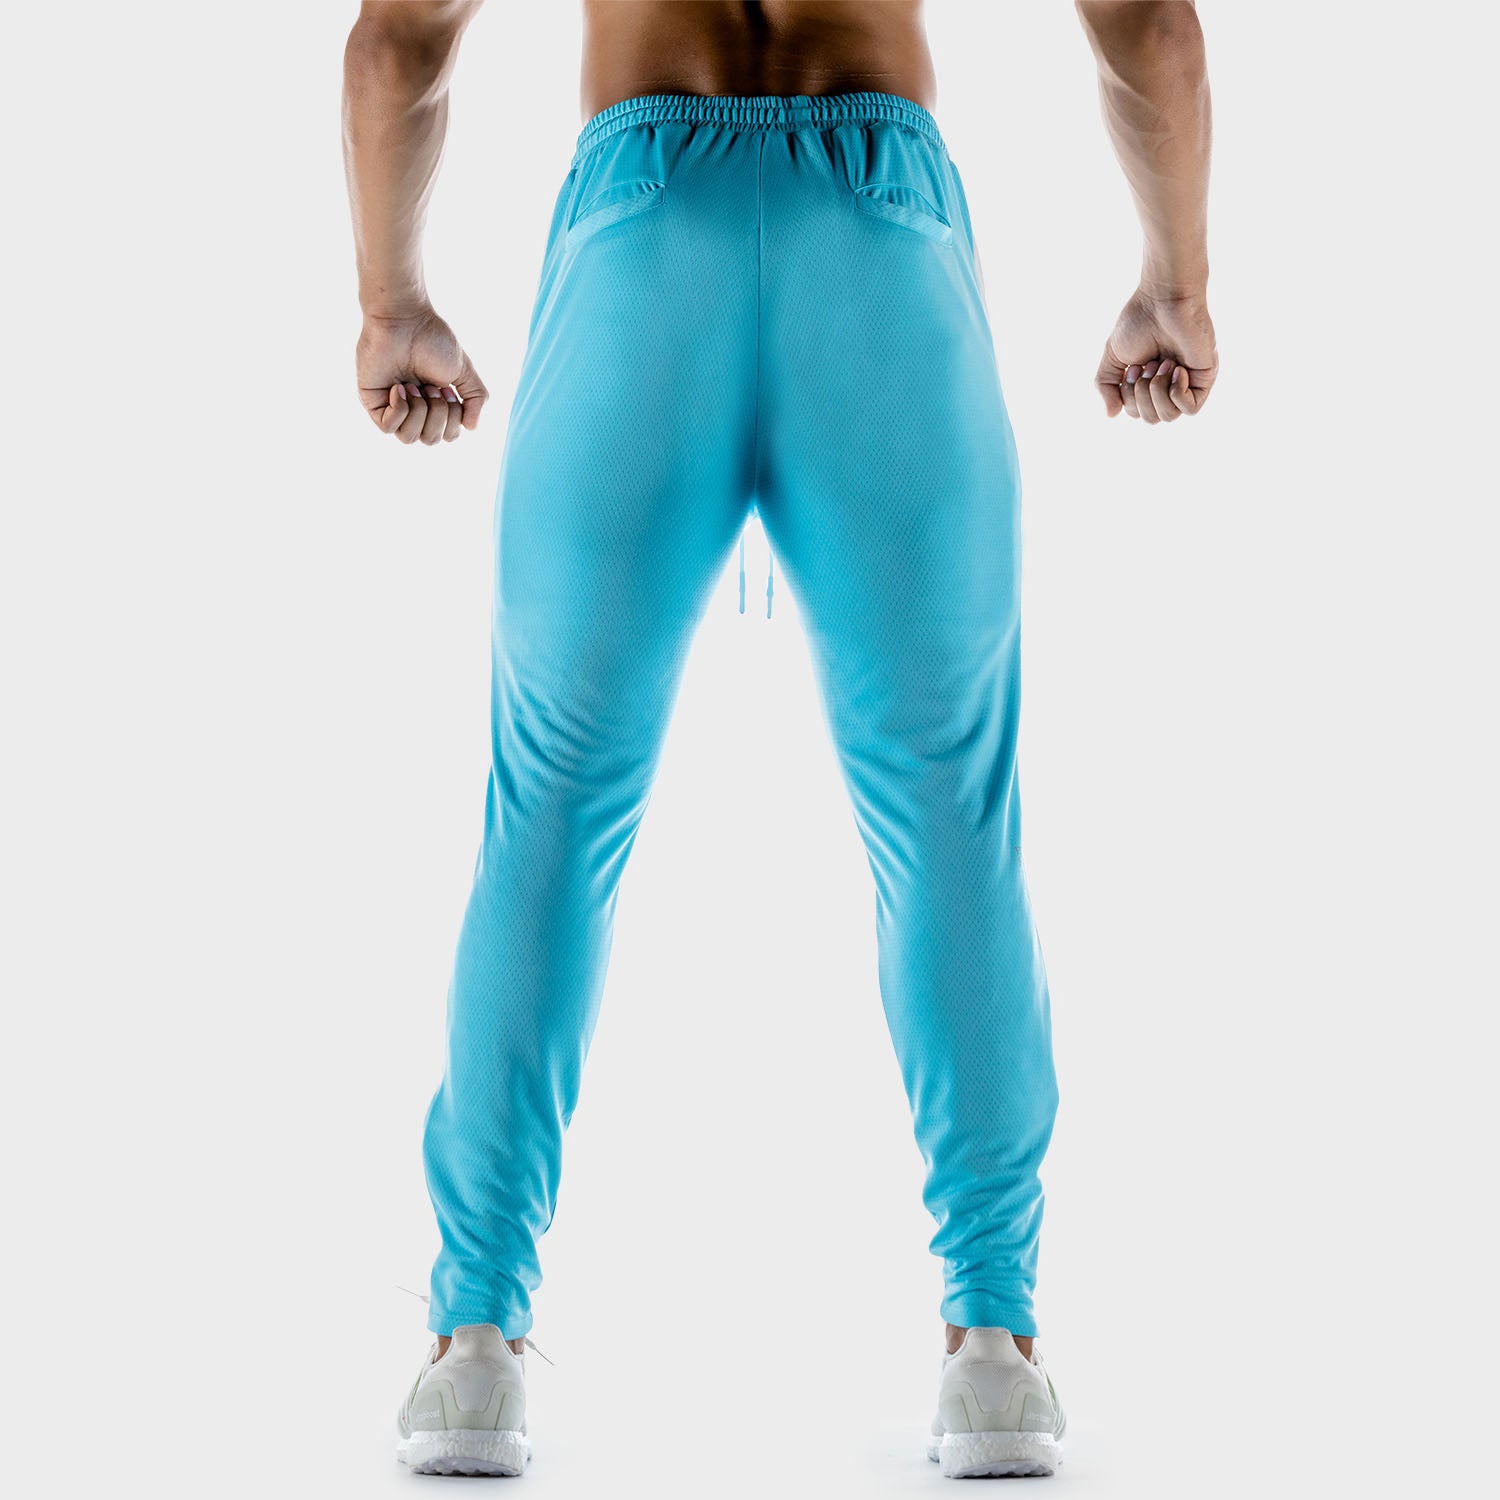 squatwolf-gym-wear-hybrid-2-0-track-pants-blue-workout-pants-for-men